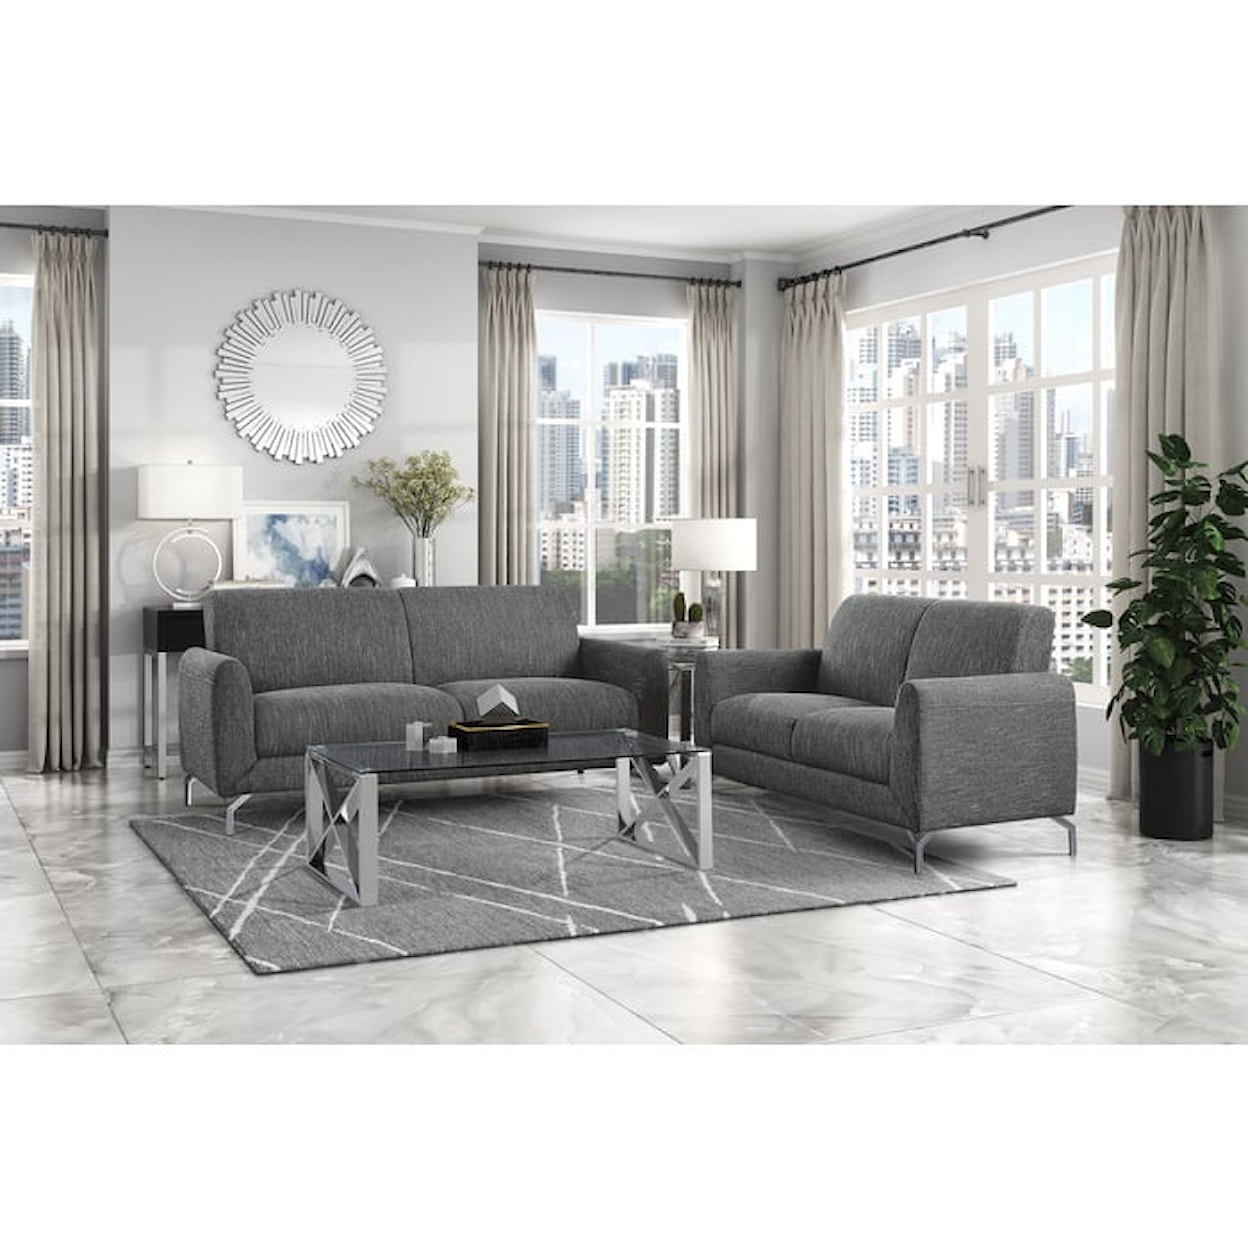 Homelegance Venture Stationary Sofa